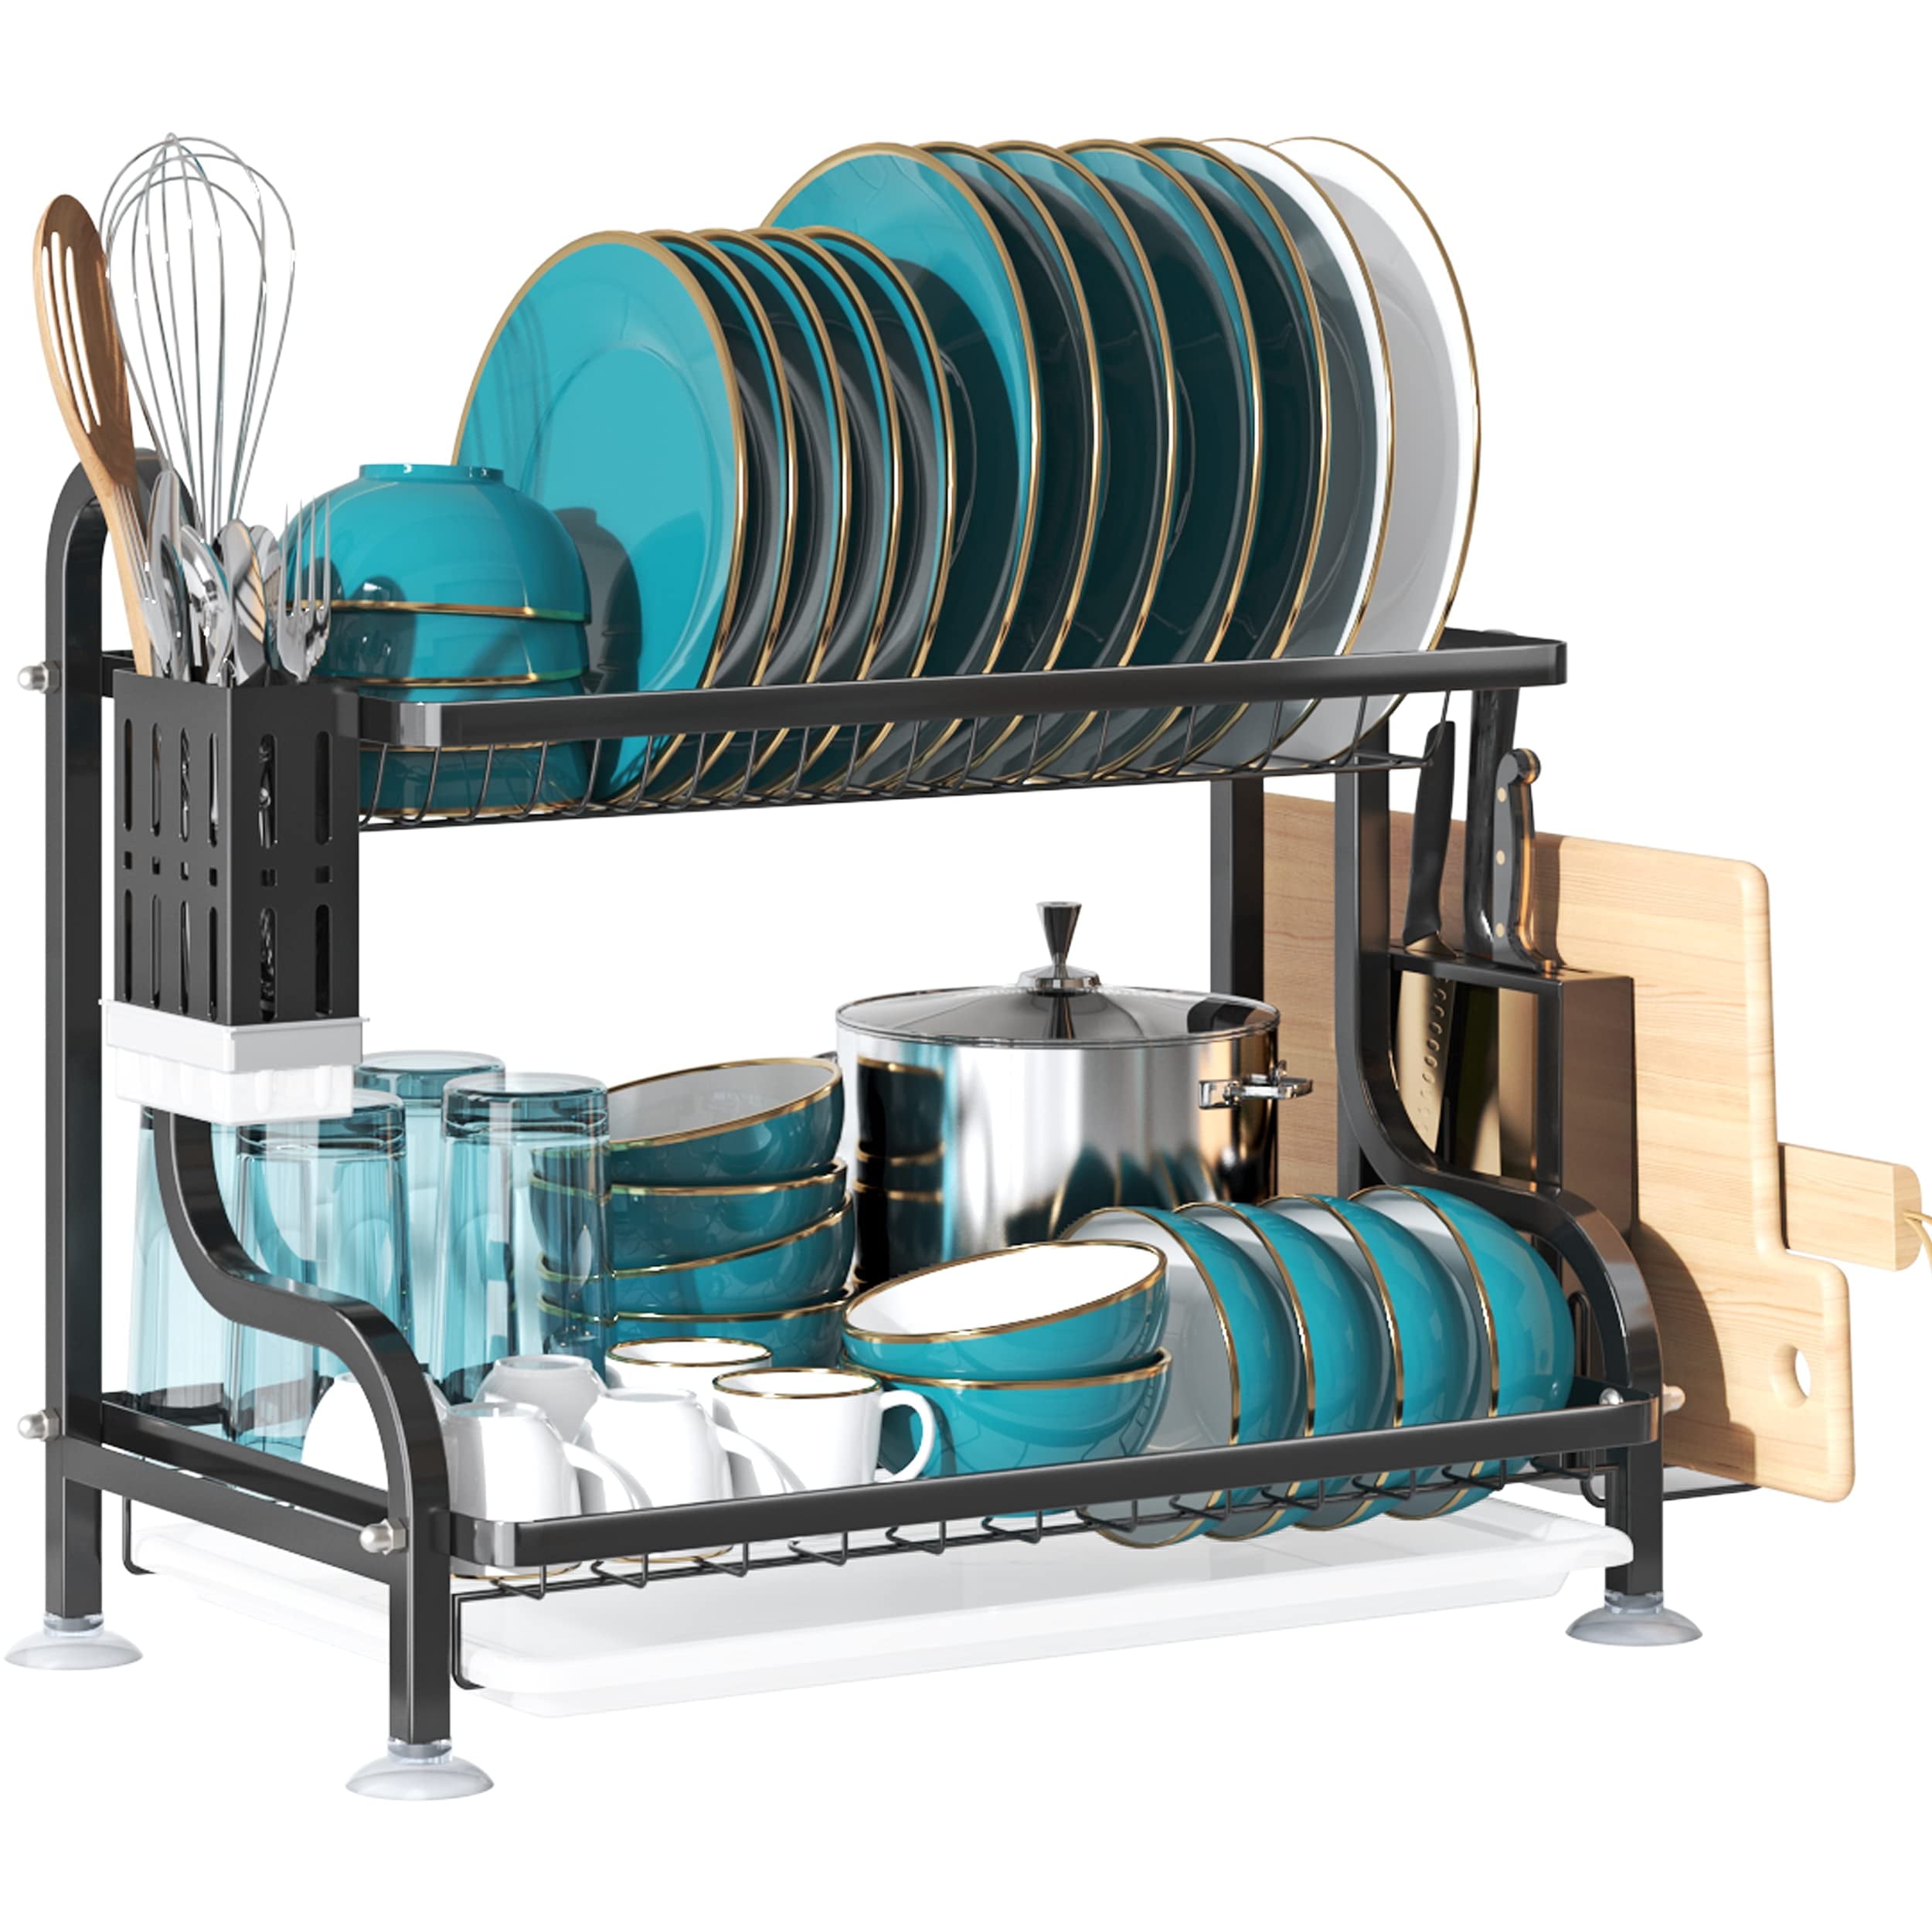 MAJALiS Large Dish Drying Rack Set